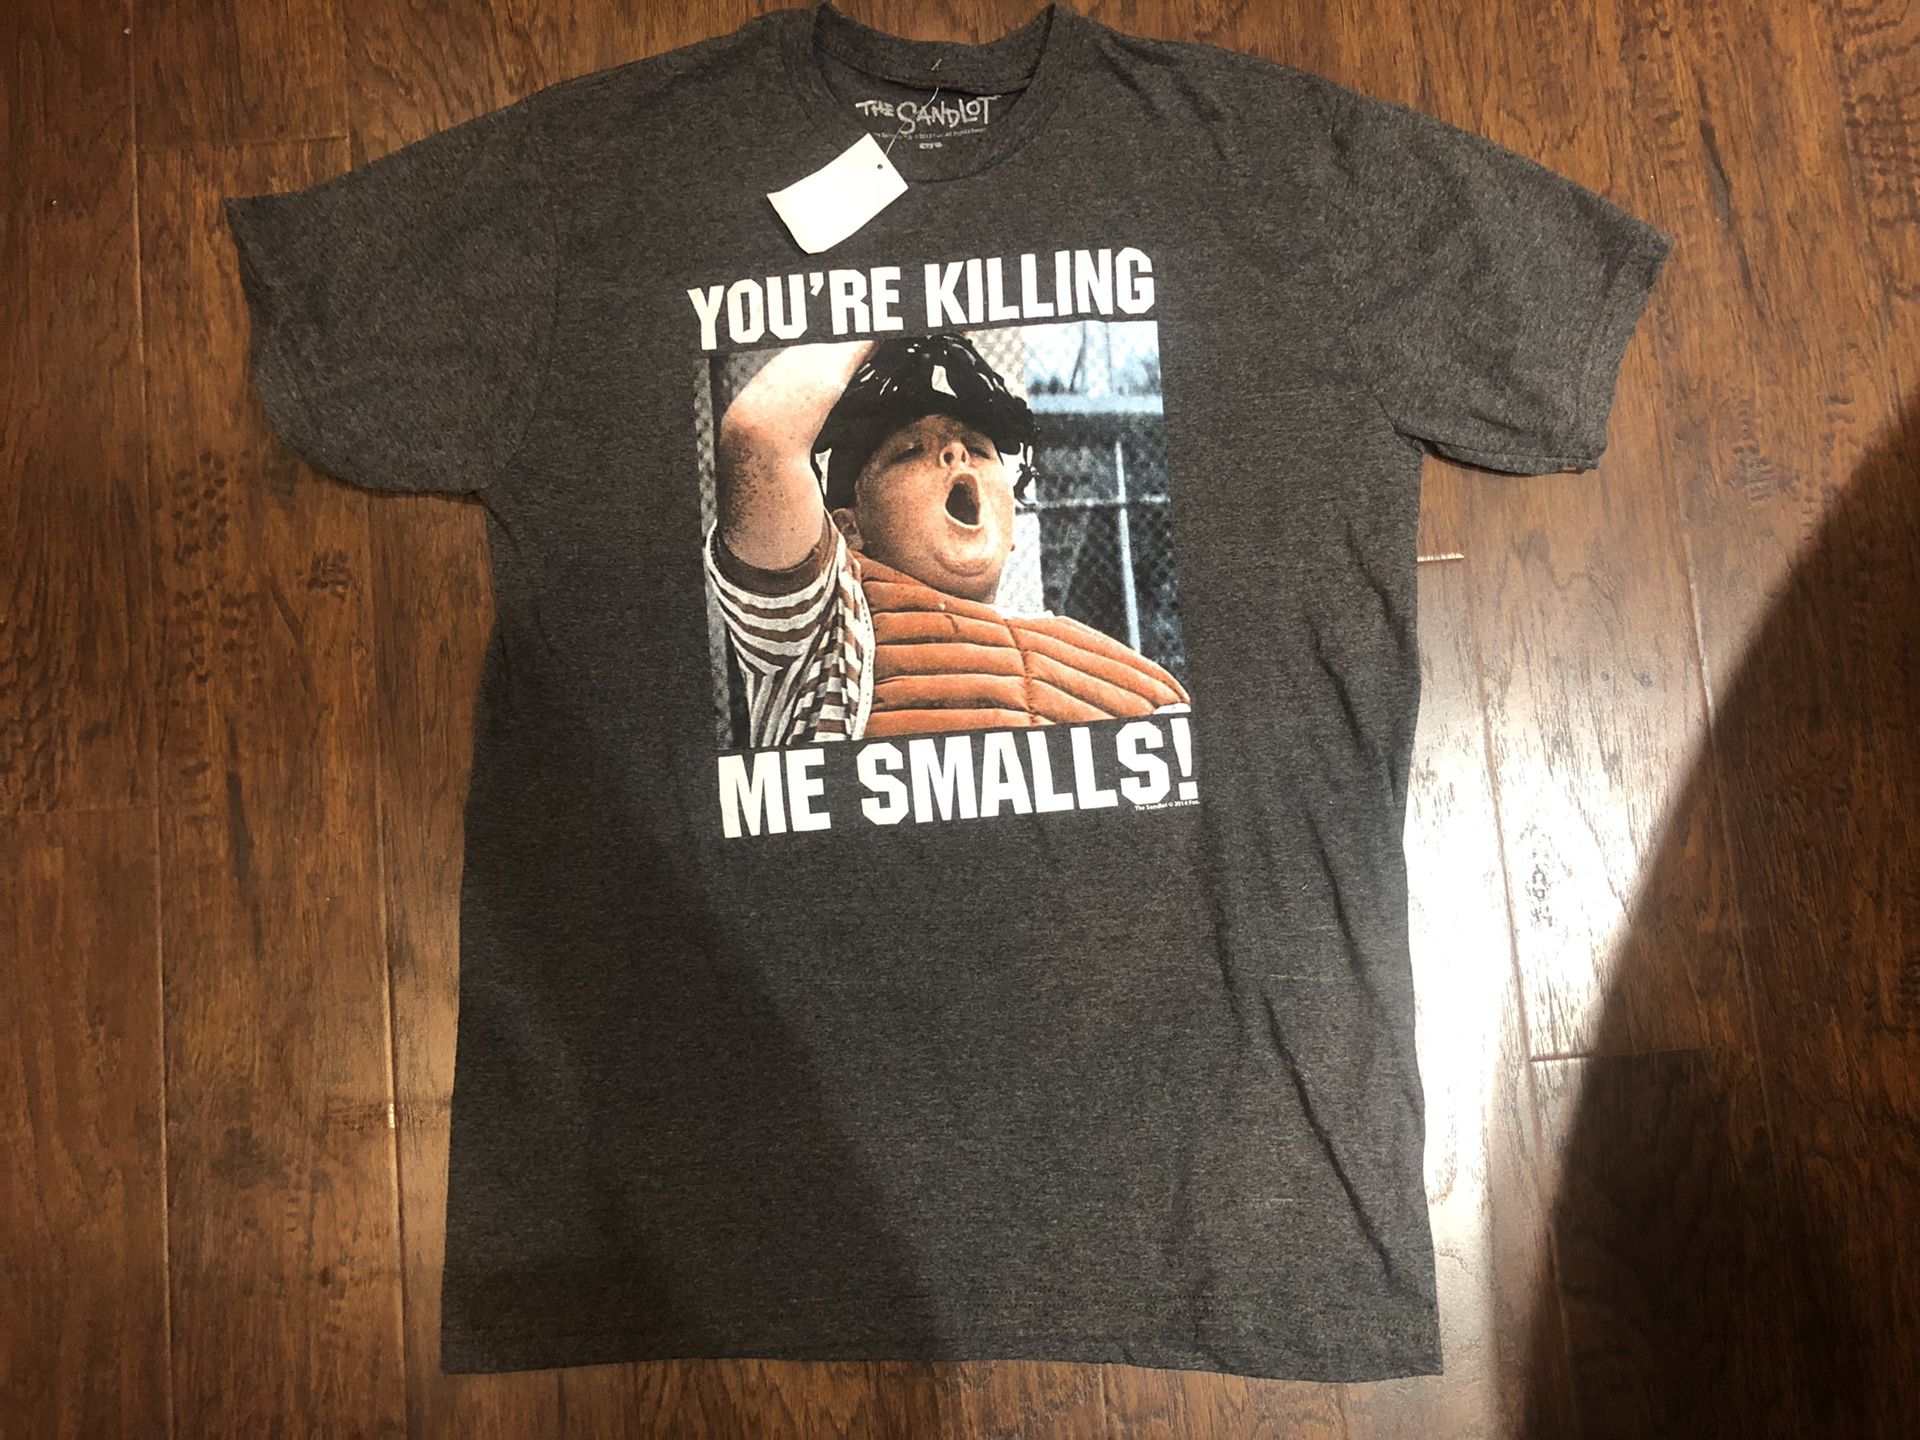 ⚾️⚾️⚾️ Brand New Sandlot XL T-Shirt - “You’re Killing Me Smalls!” ⚾️⚾️⚾️